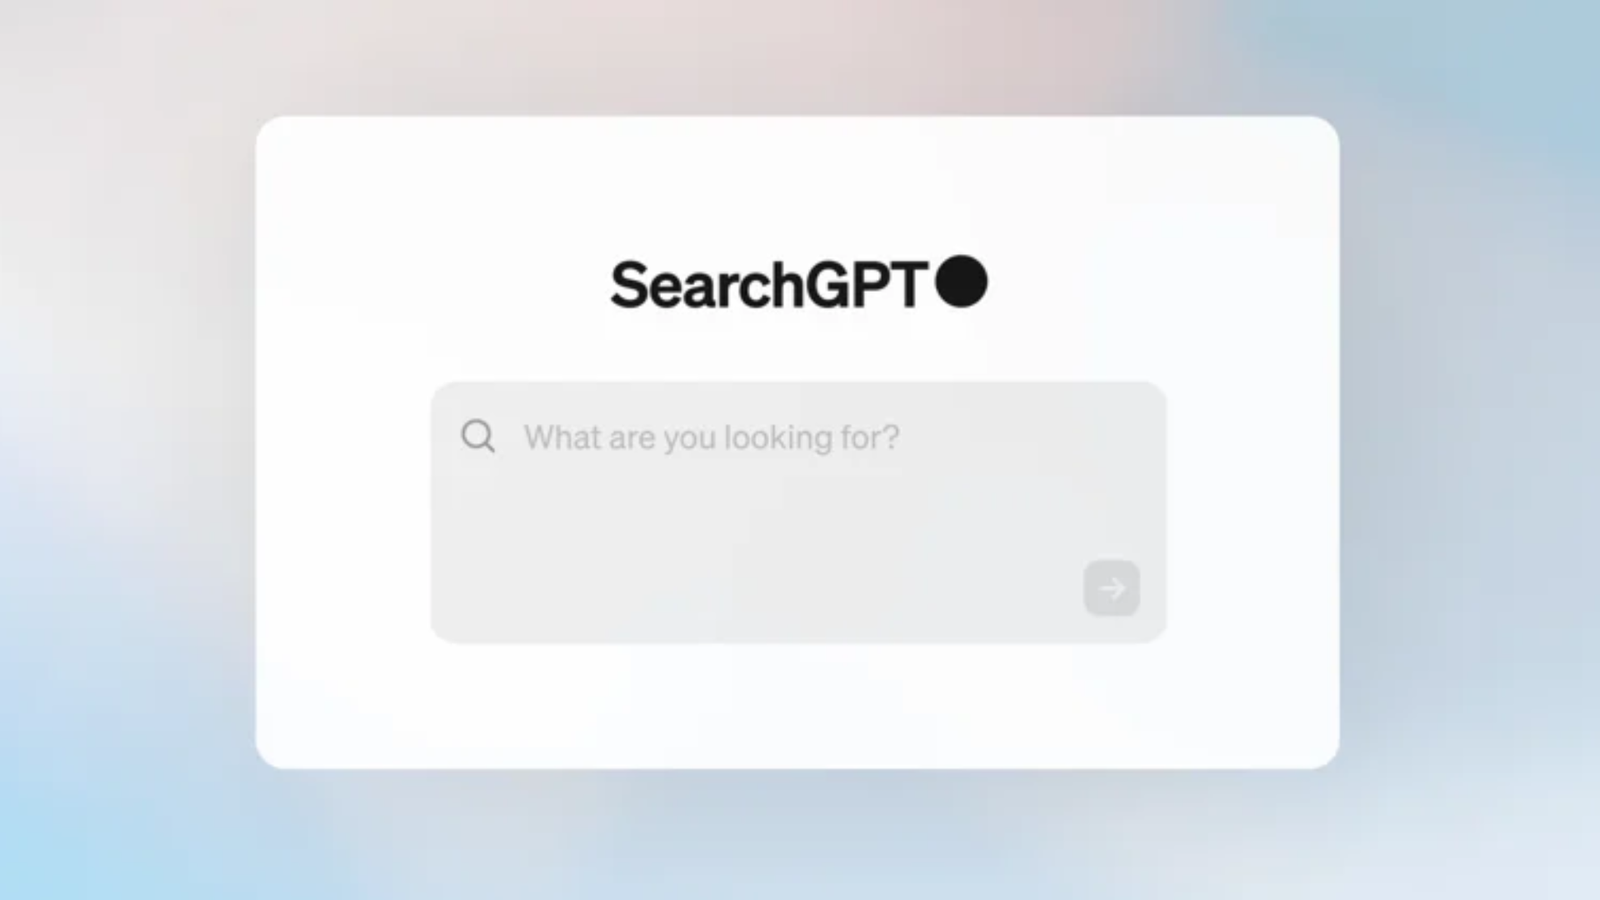 An image of the OpenAI SearchGPT interface